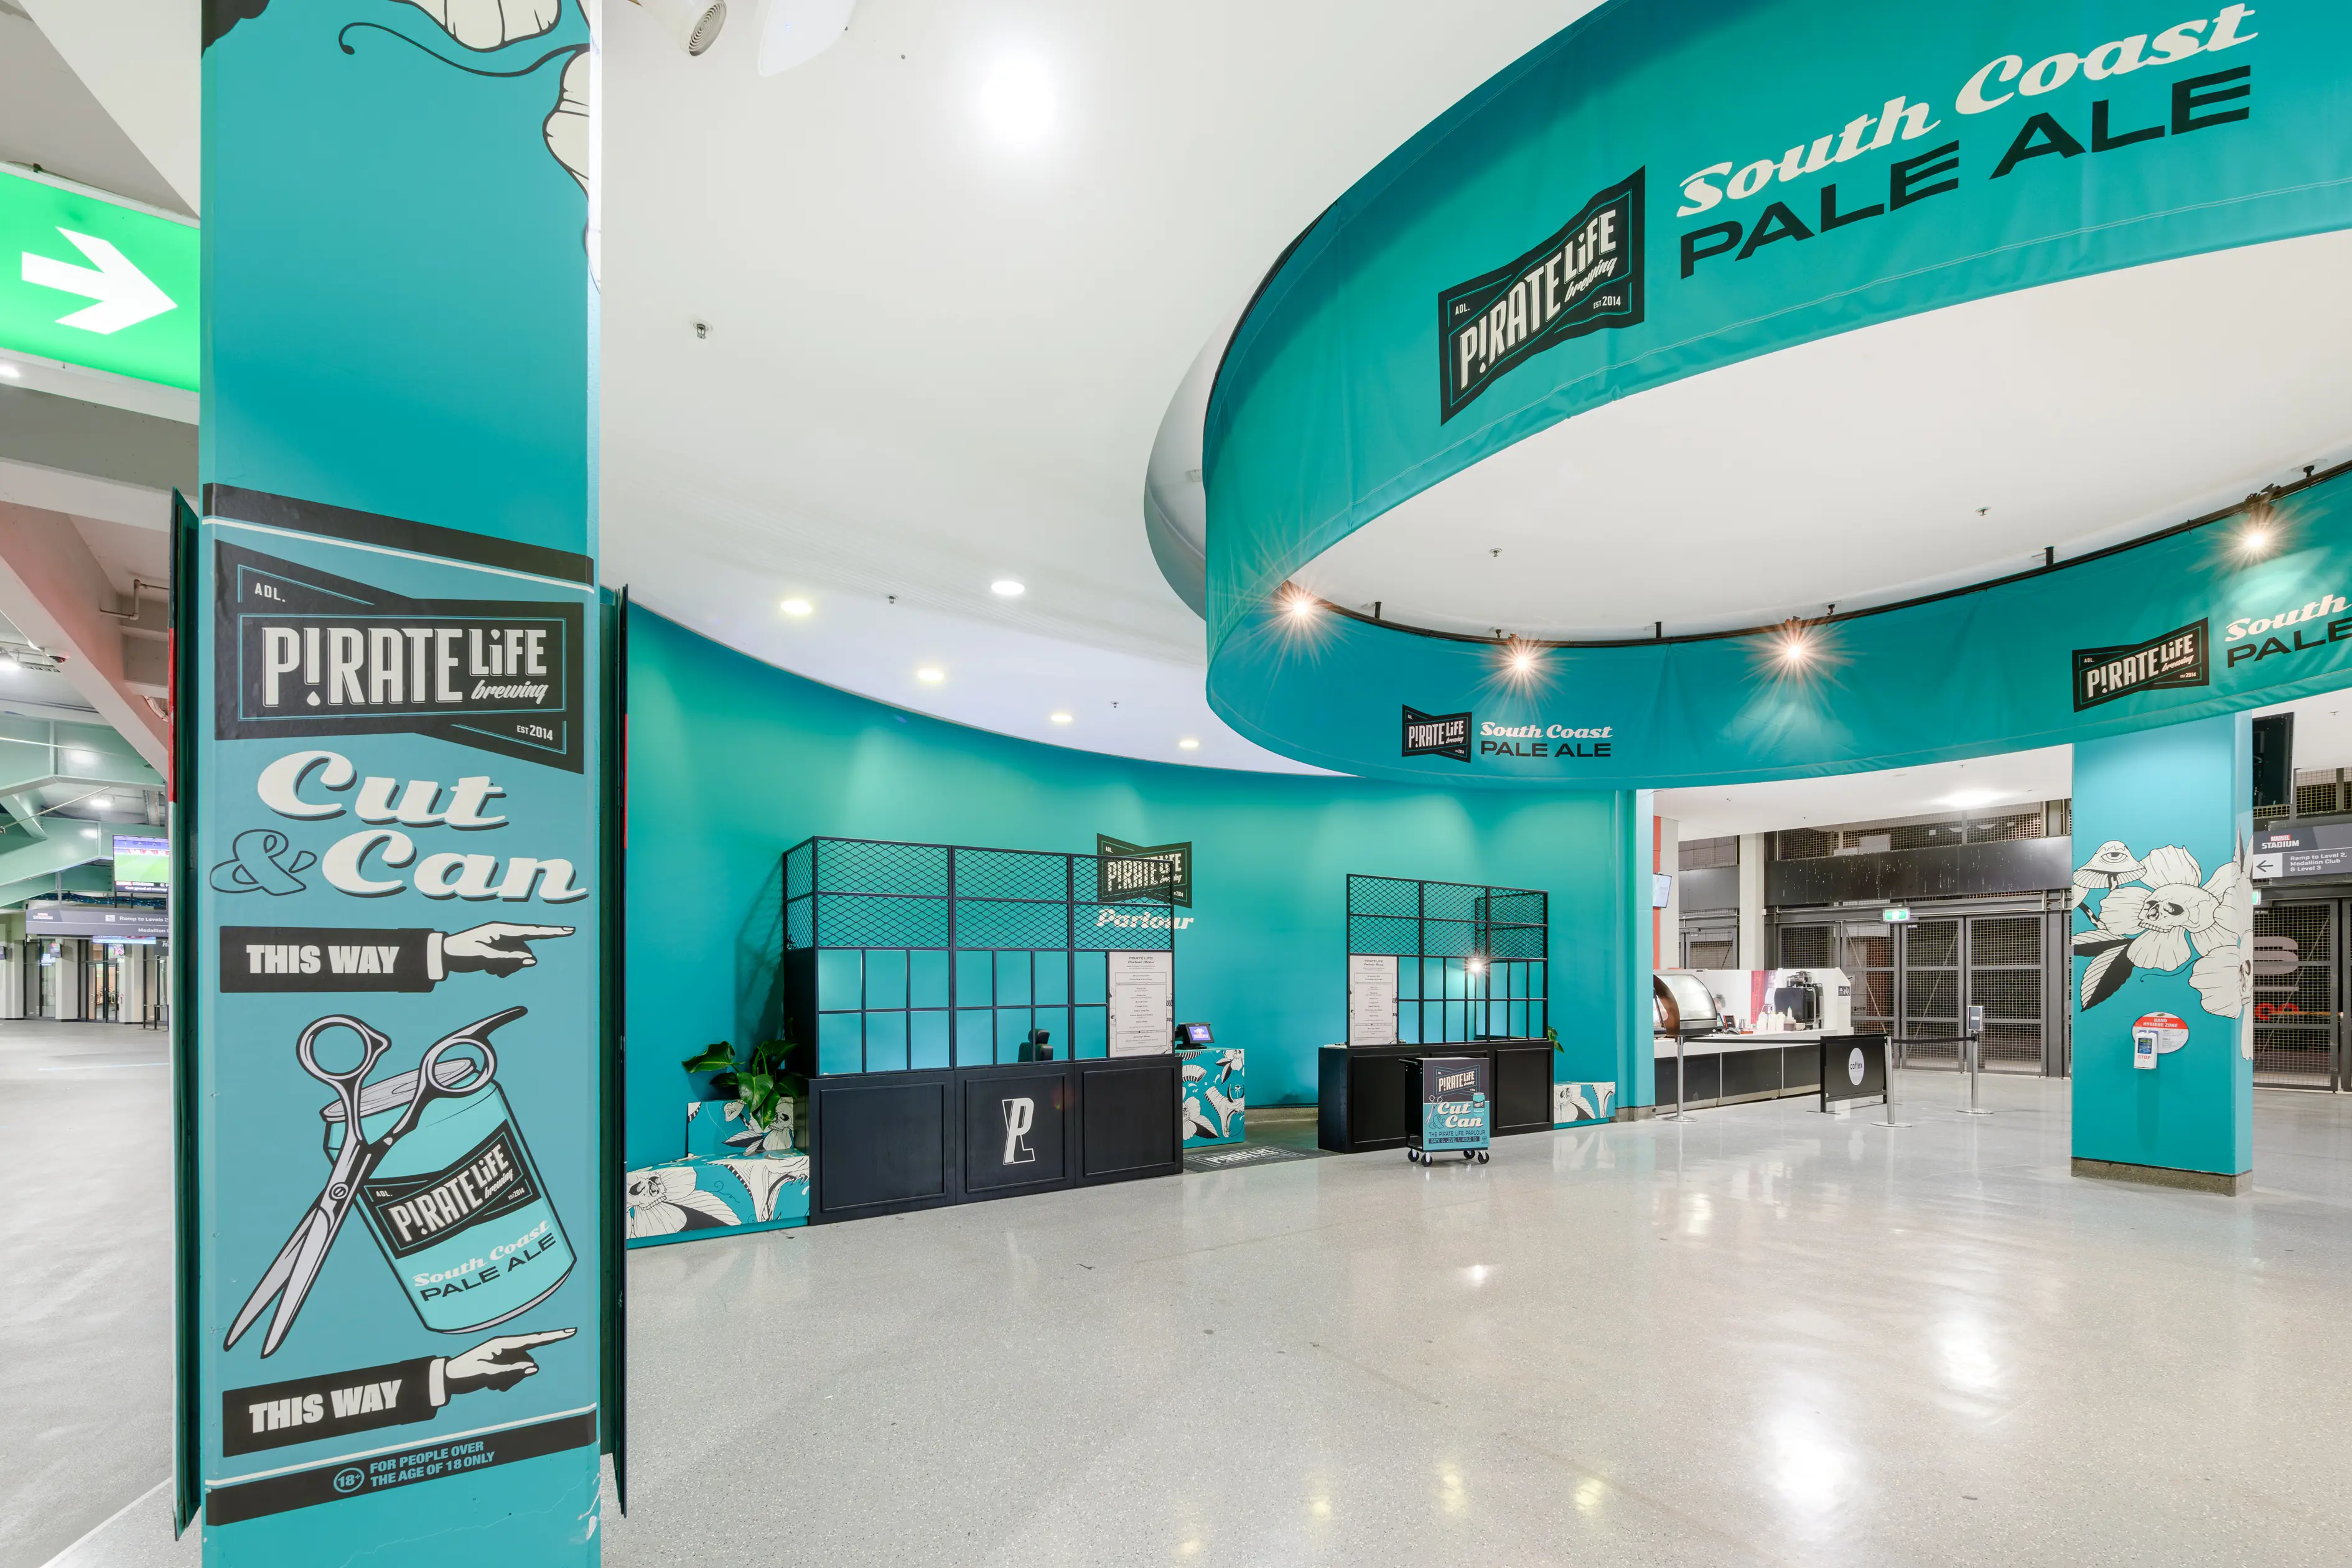 Pirate Life Parlour - brand activation, event management - Marvel Stadium, Melbourne, Australia